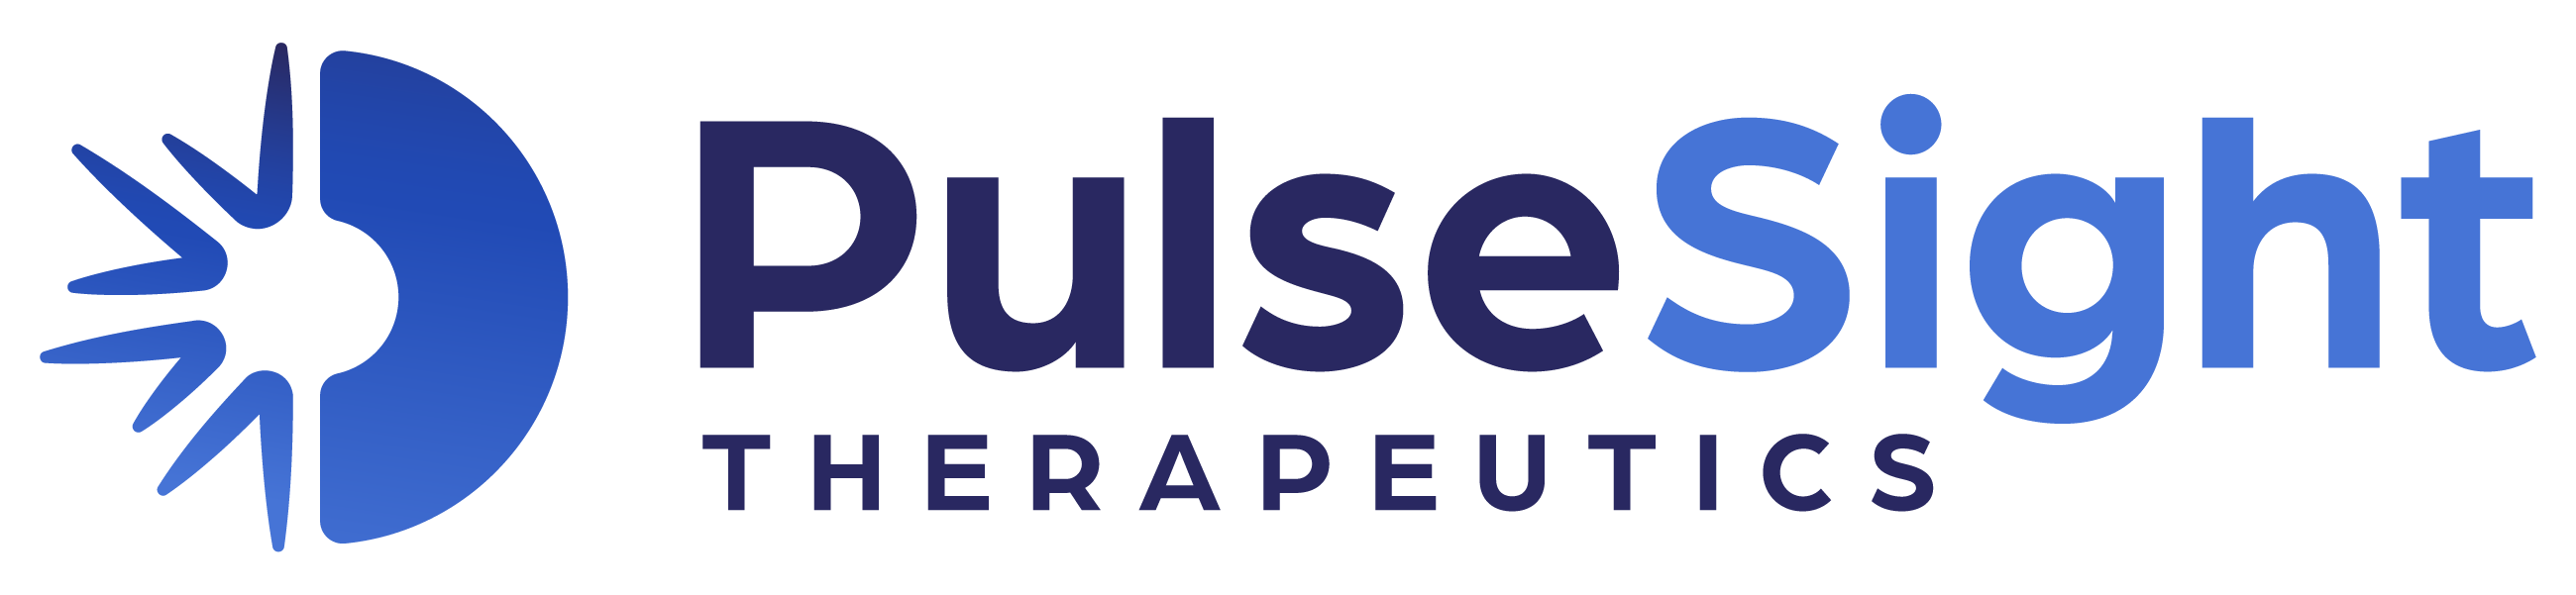 PulseSight Therapeutics Logo - Horizontal (Full Gradient Mark) (002).png